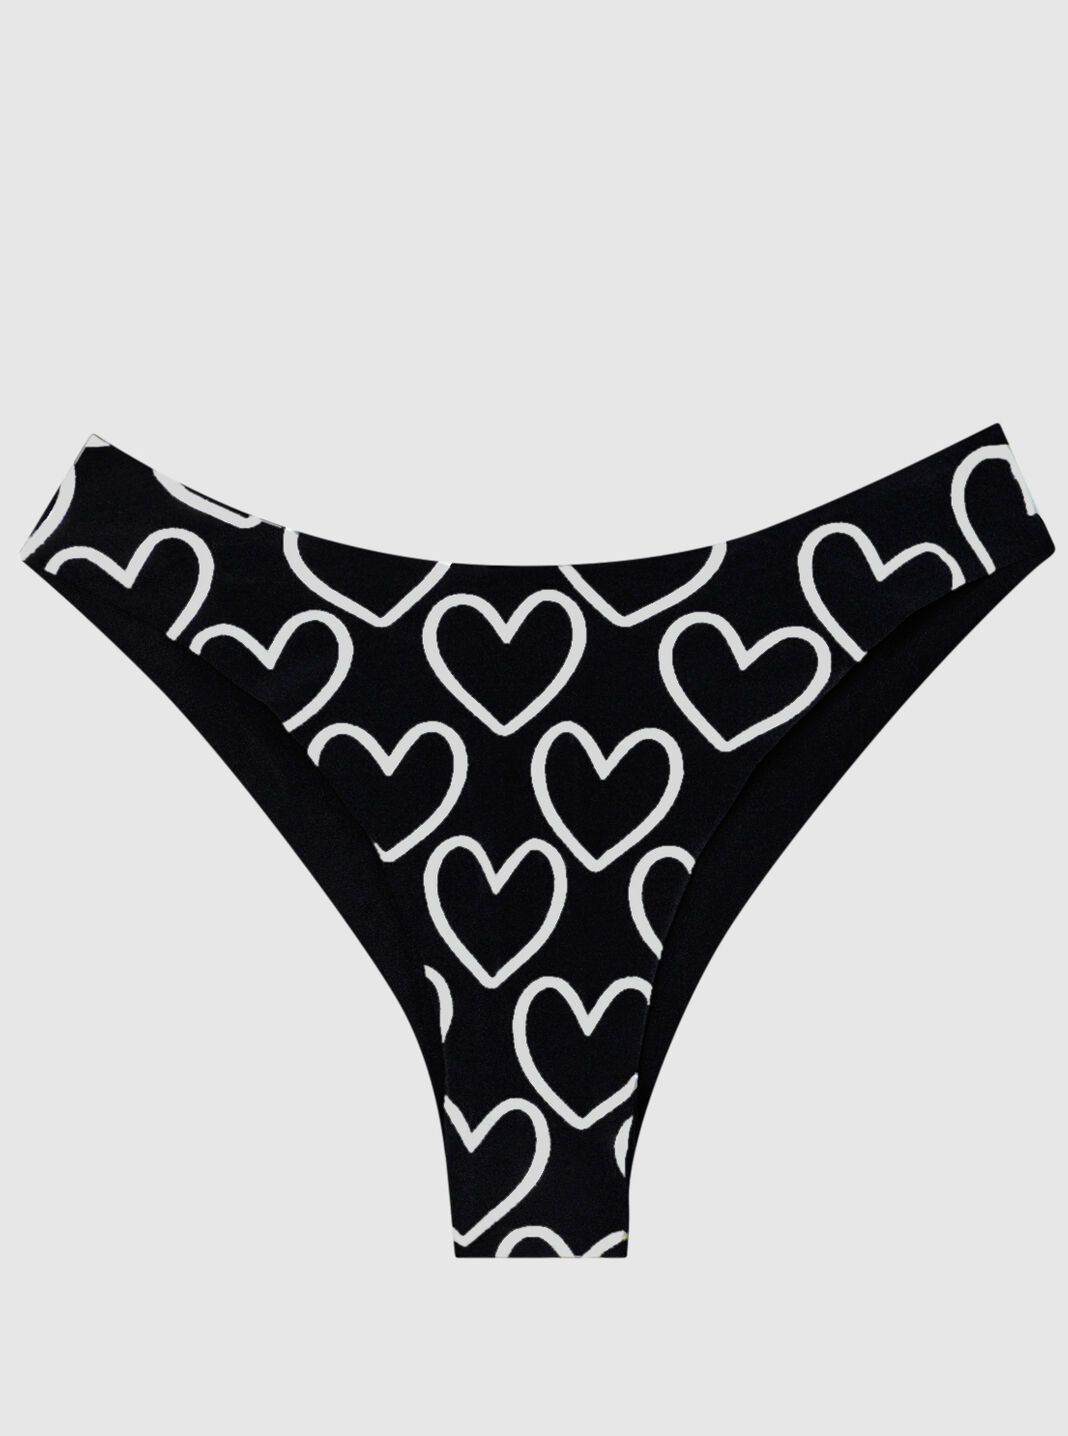 VISSAY Seamless Underwear for Women Invisible Breathable Bikini